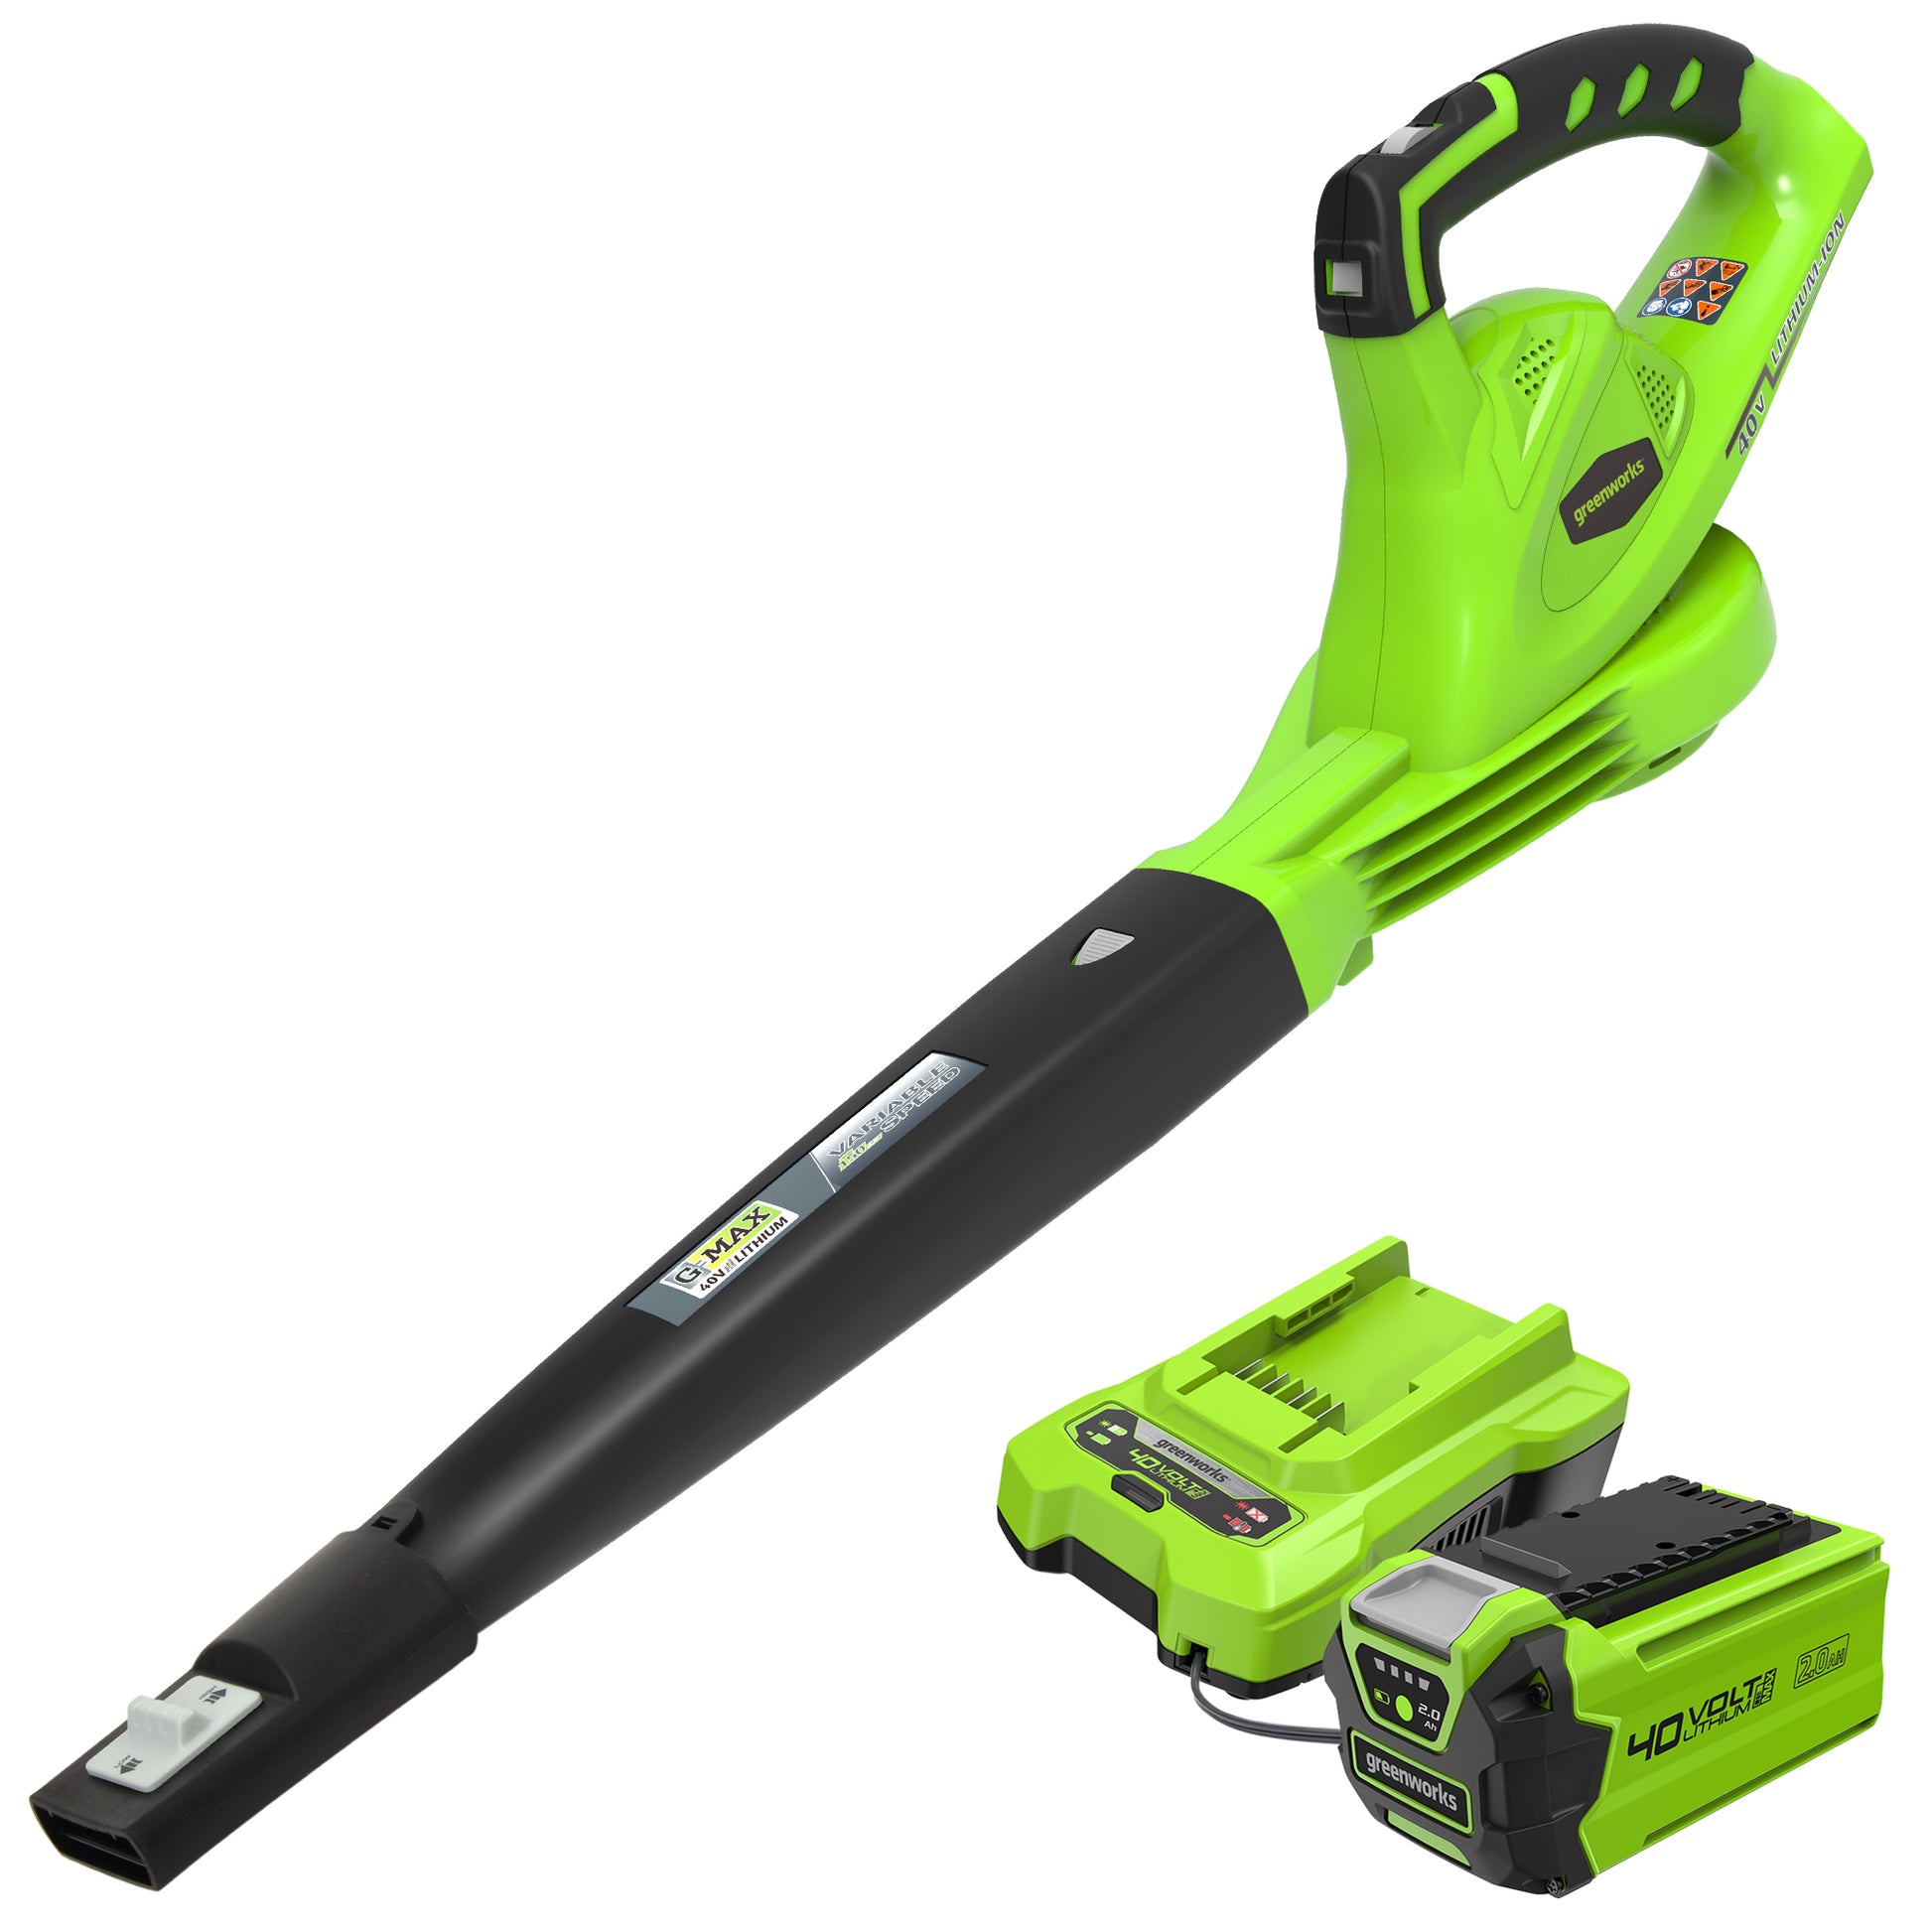 Greenworks G-Max 40V Cordless Blower/Vacuum